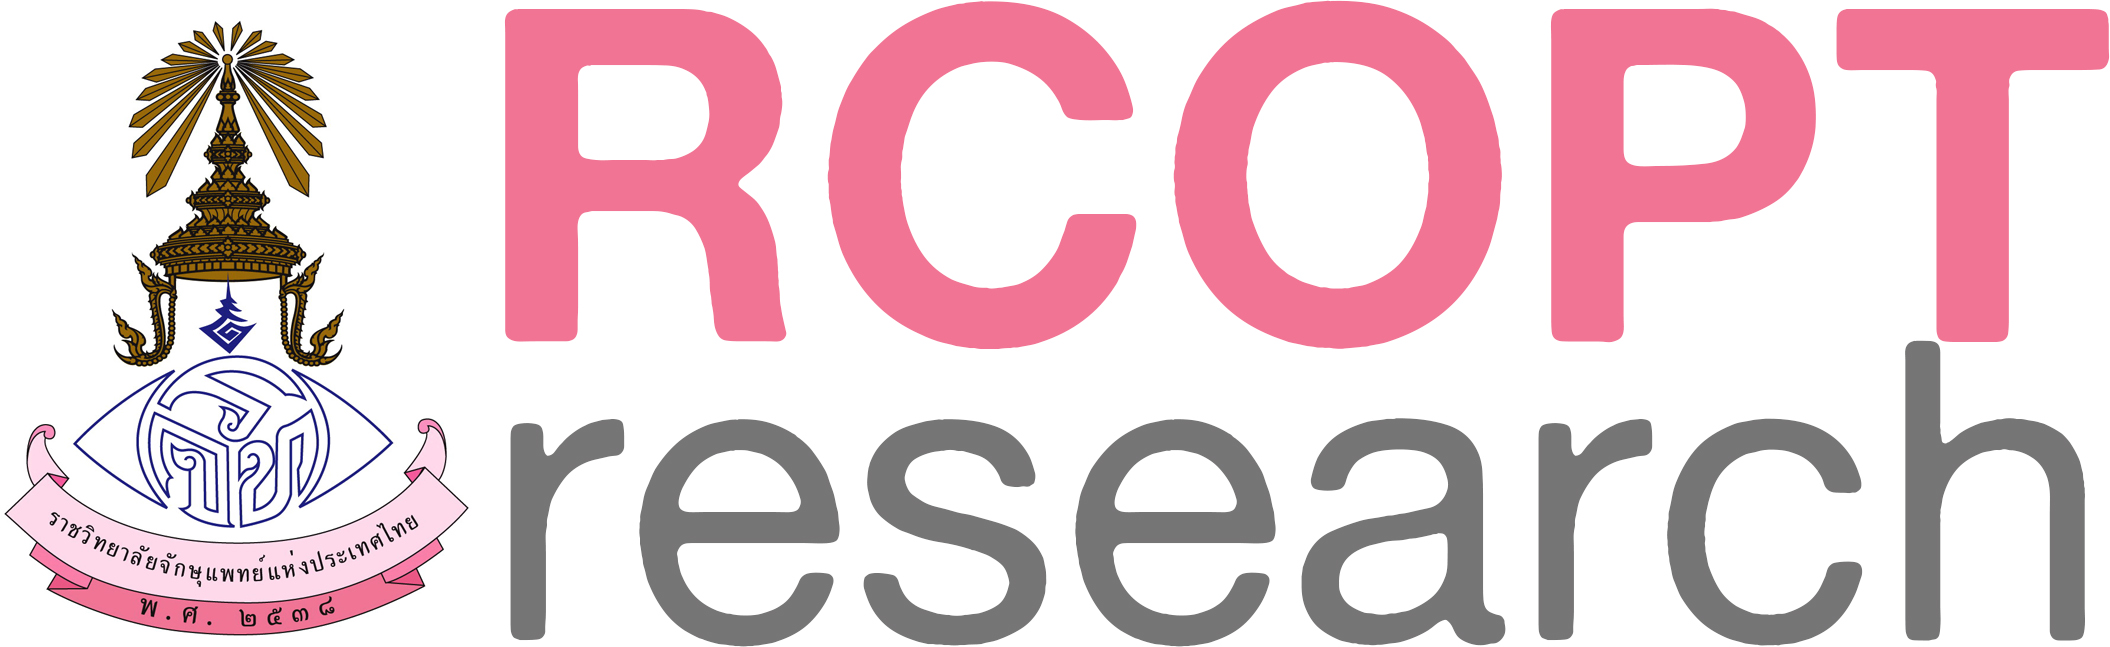 2130RCOPT research logo1.jpg